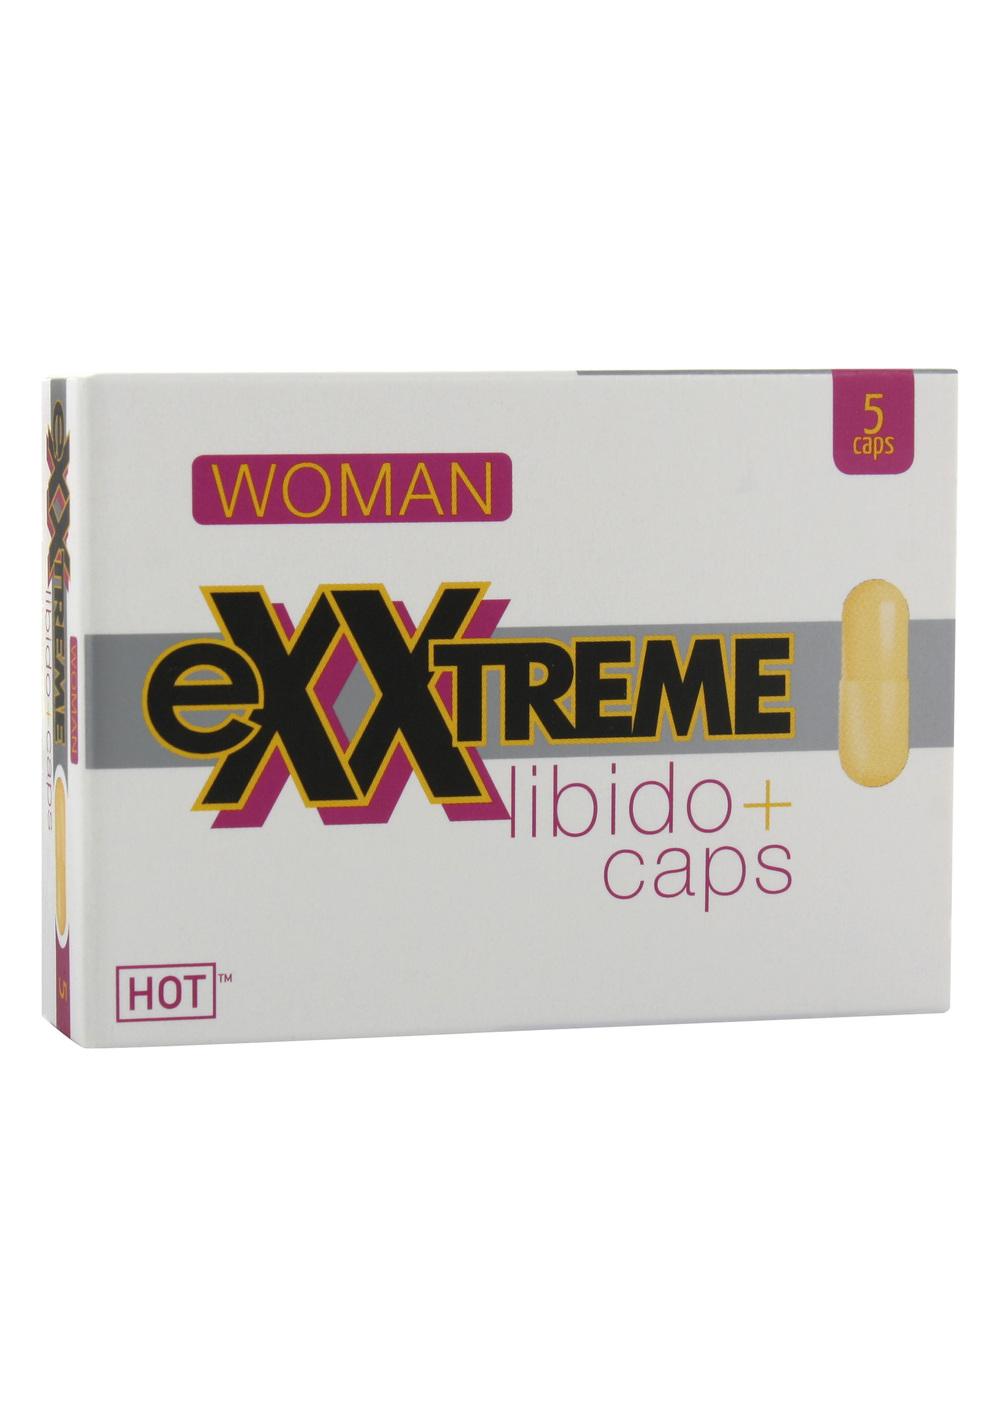 HOT Exxtreme Libido caps pro ženy 5 tabl. doplněk stravy HOT